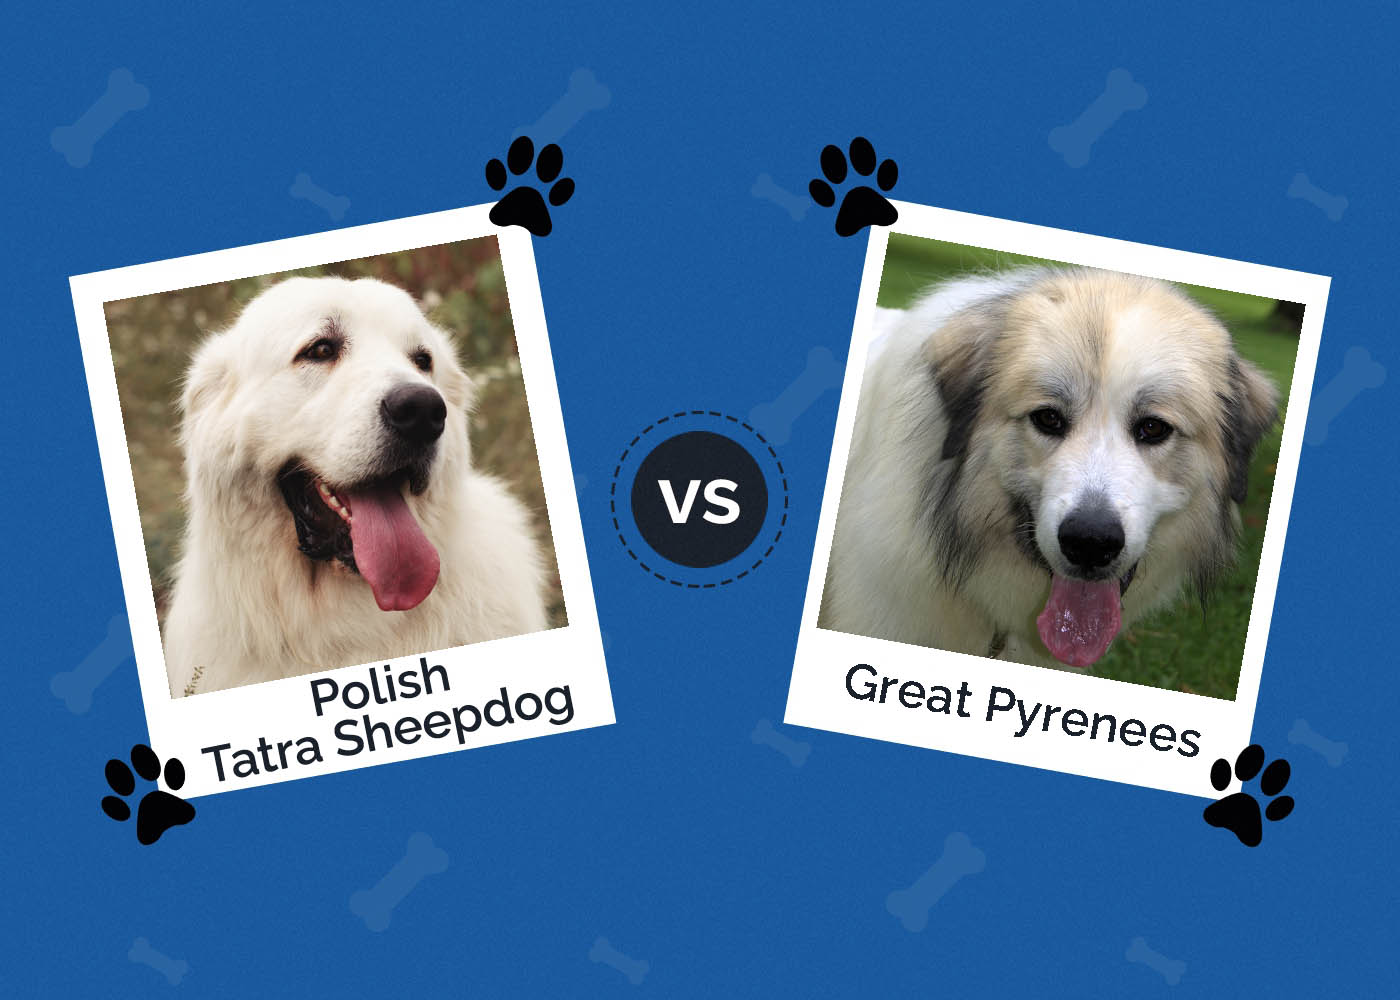 Polish Tatra Sheepdog vs Great Pyrenees